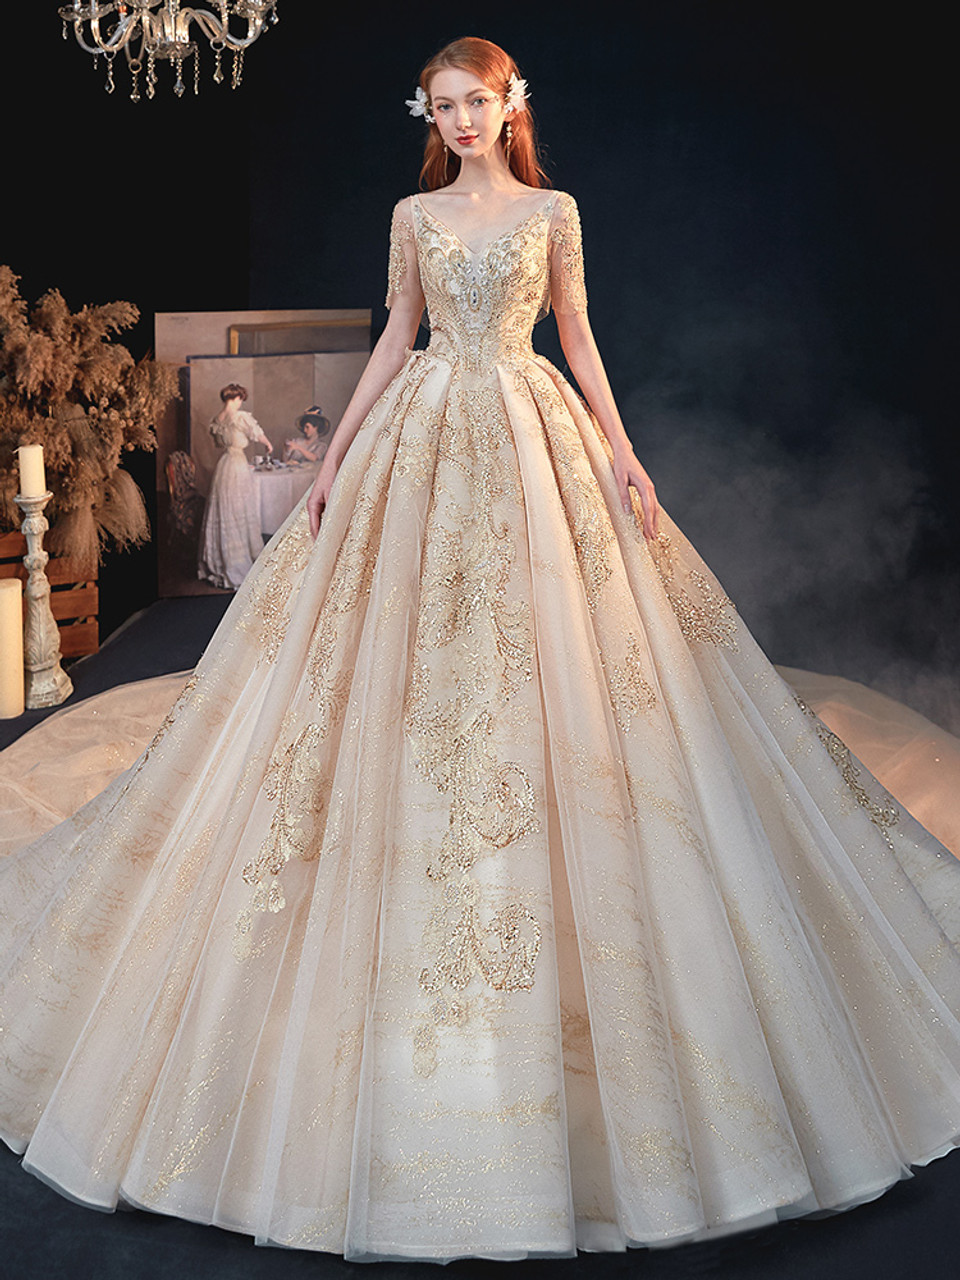 Strapless Ballerina Style Tulle Tea Length Wedding Dress | Wedding dresses  under 500, Tulle party dress, Tea length wedding dress